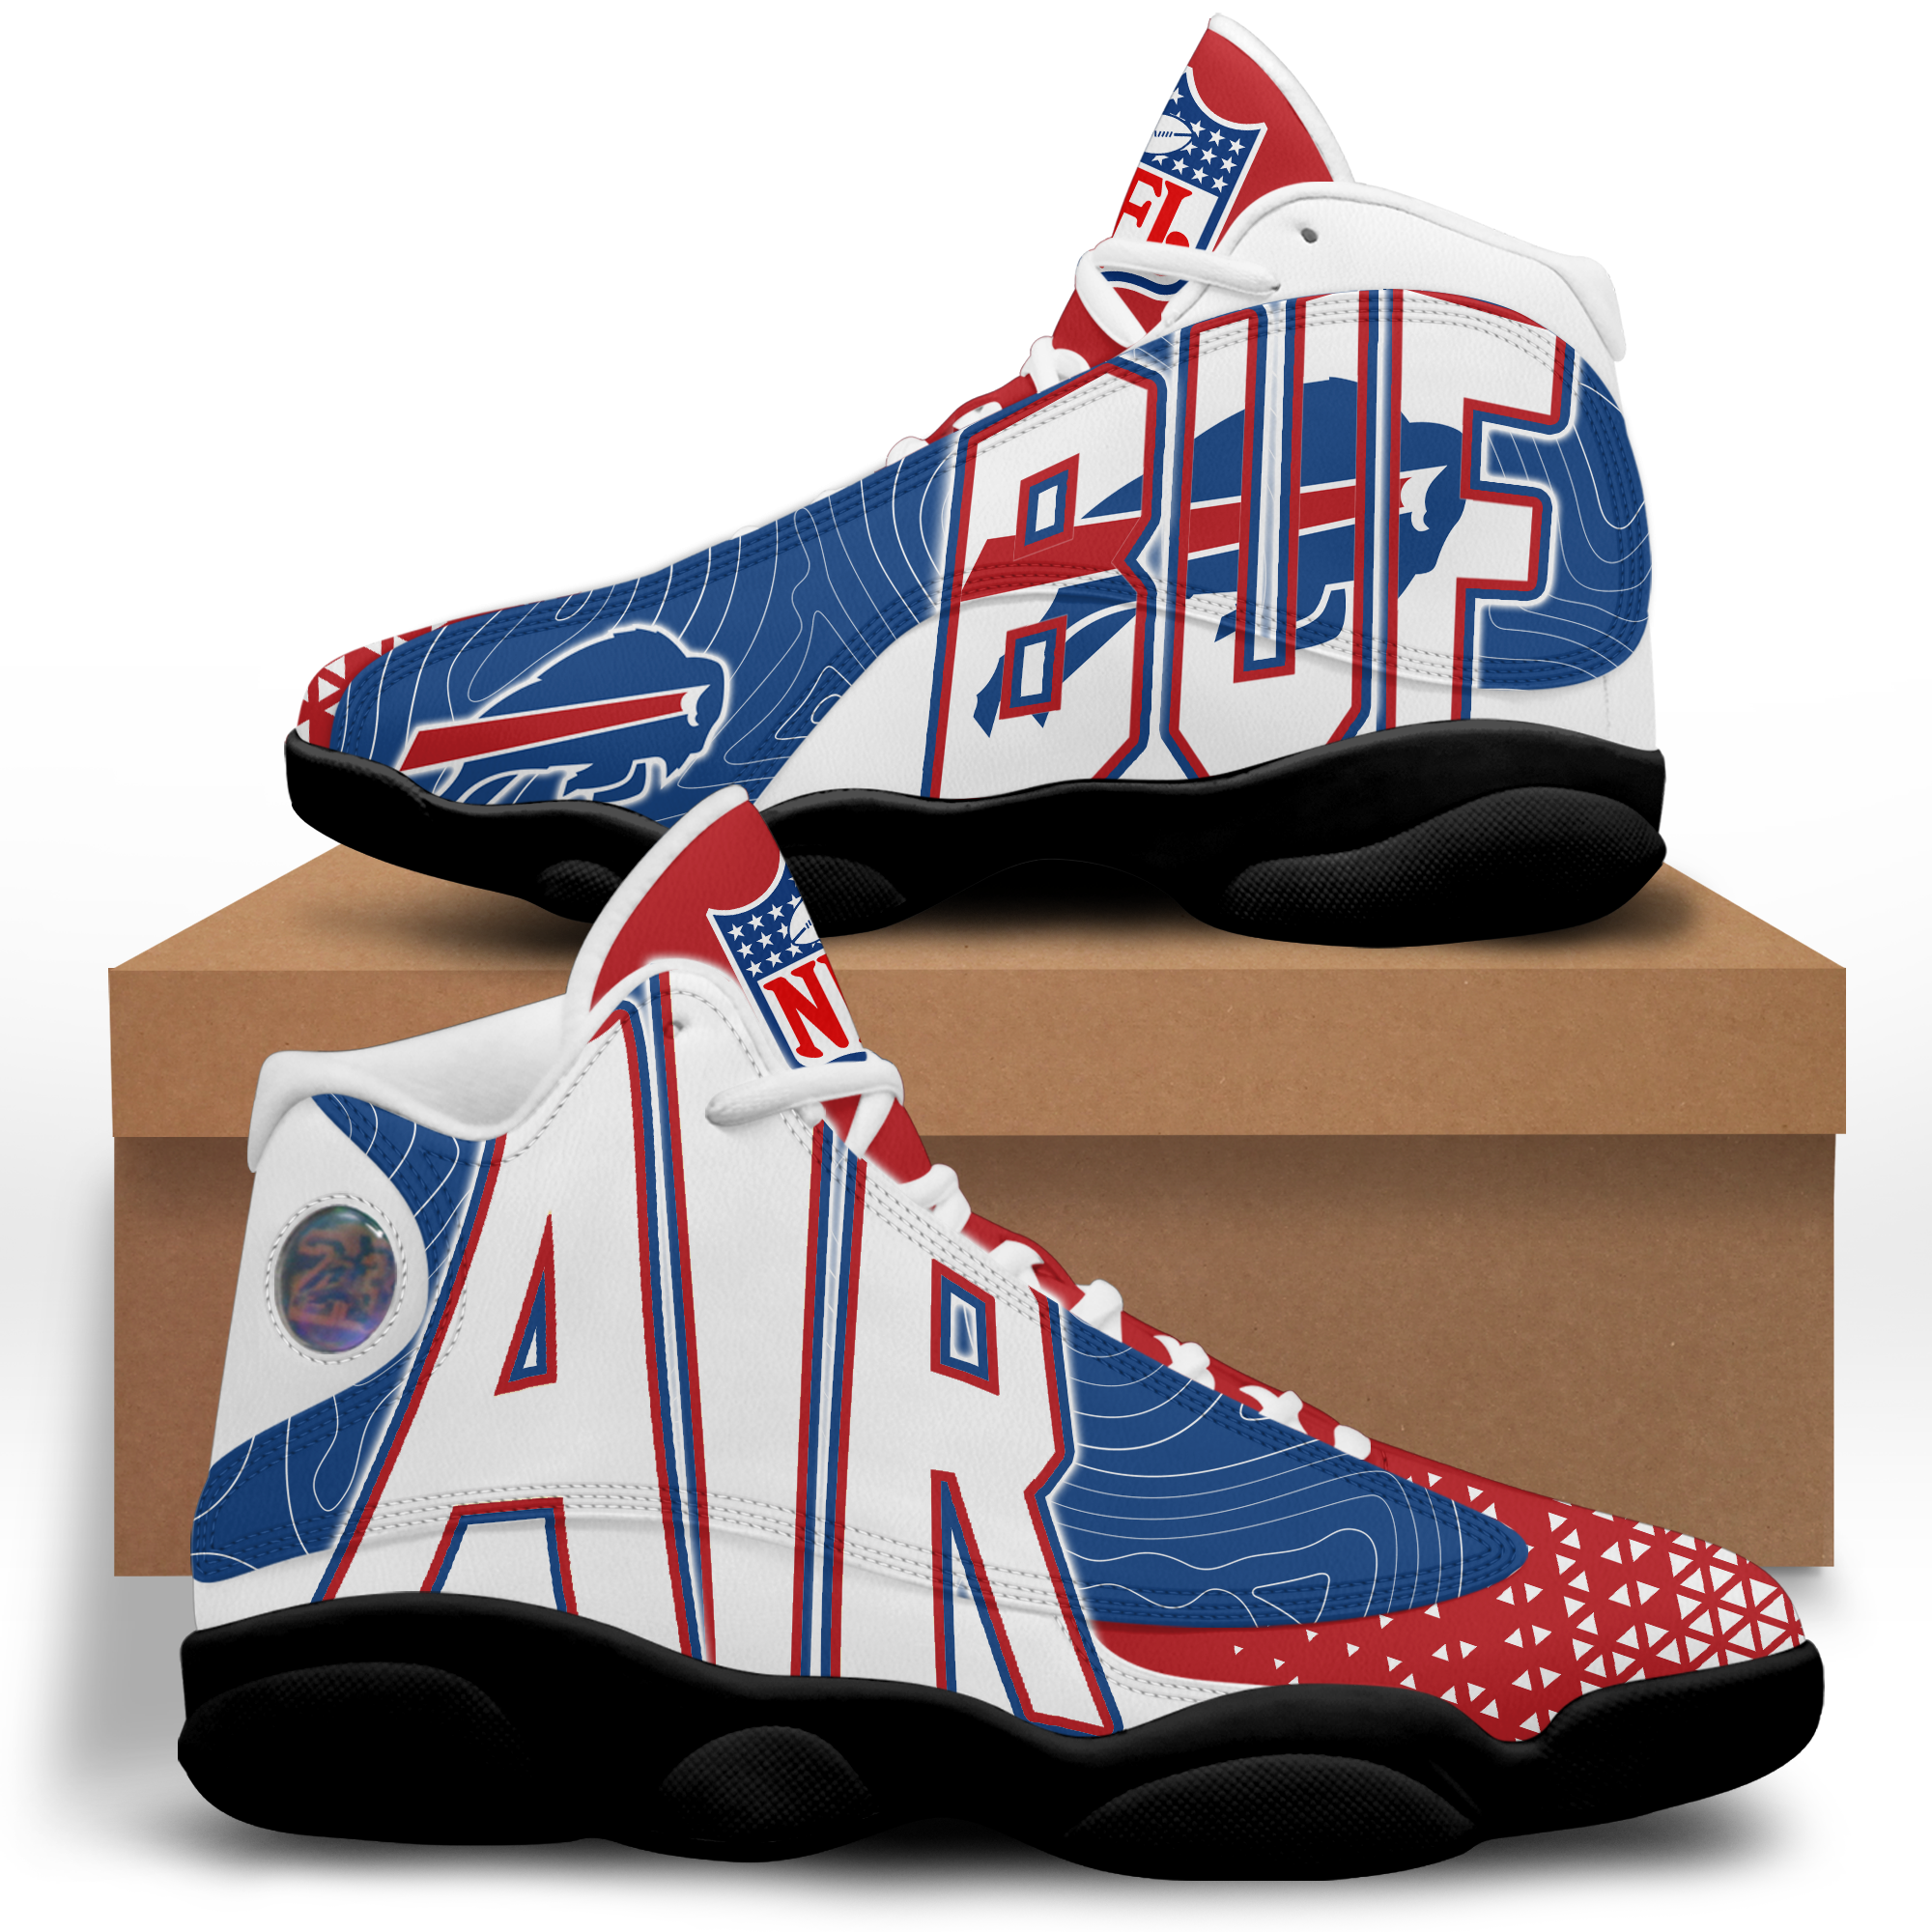 Nfl Buffalo Bills Limited Edition Air Jordan 13 For Fans Sneakers